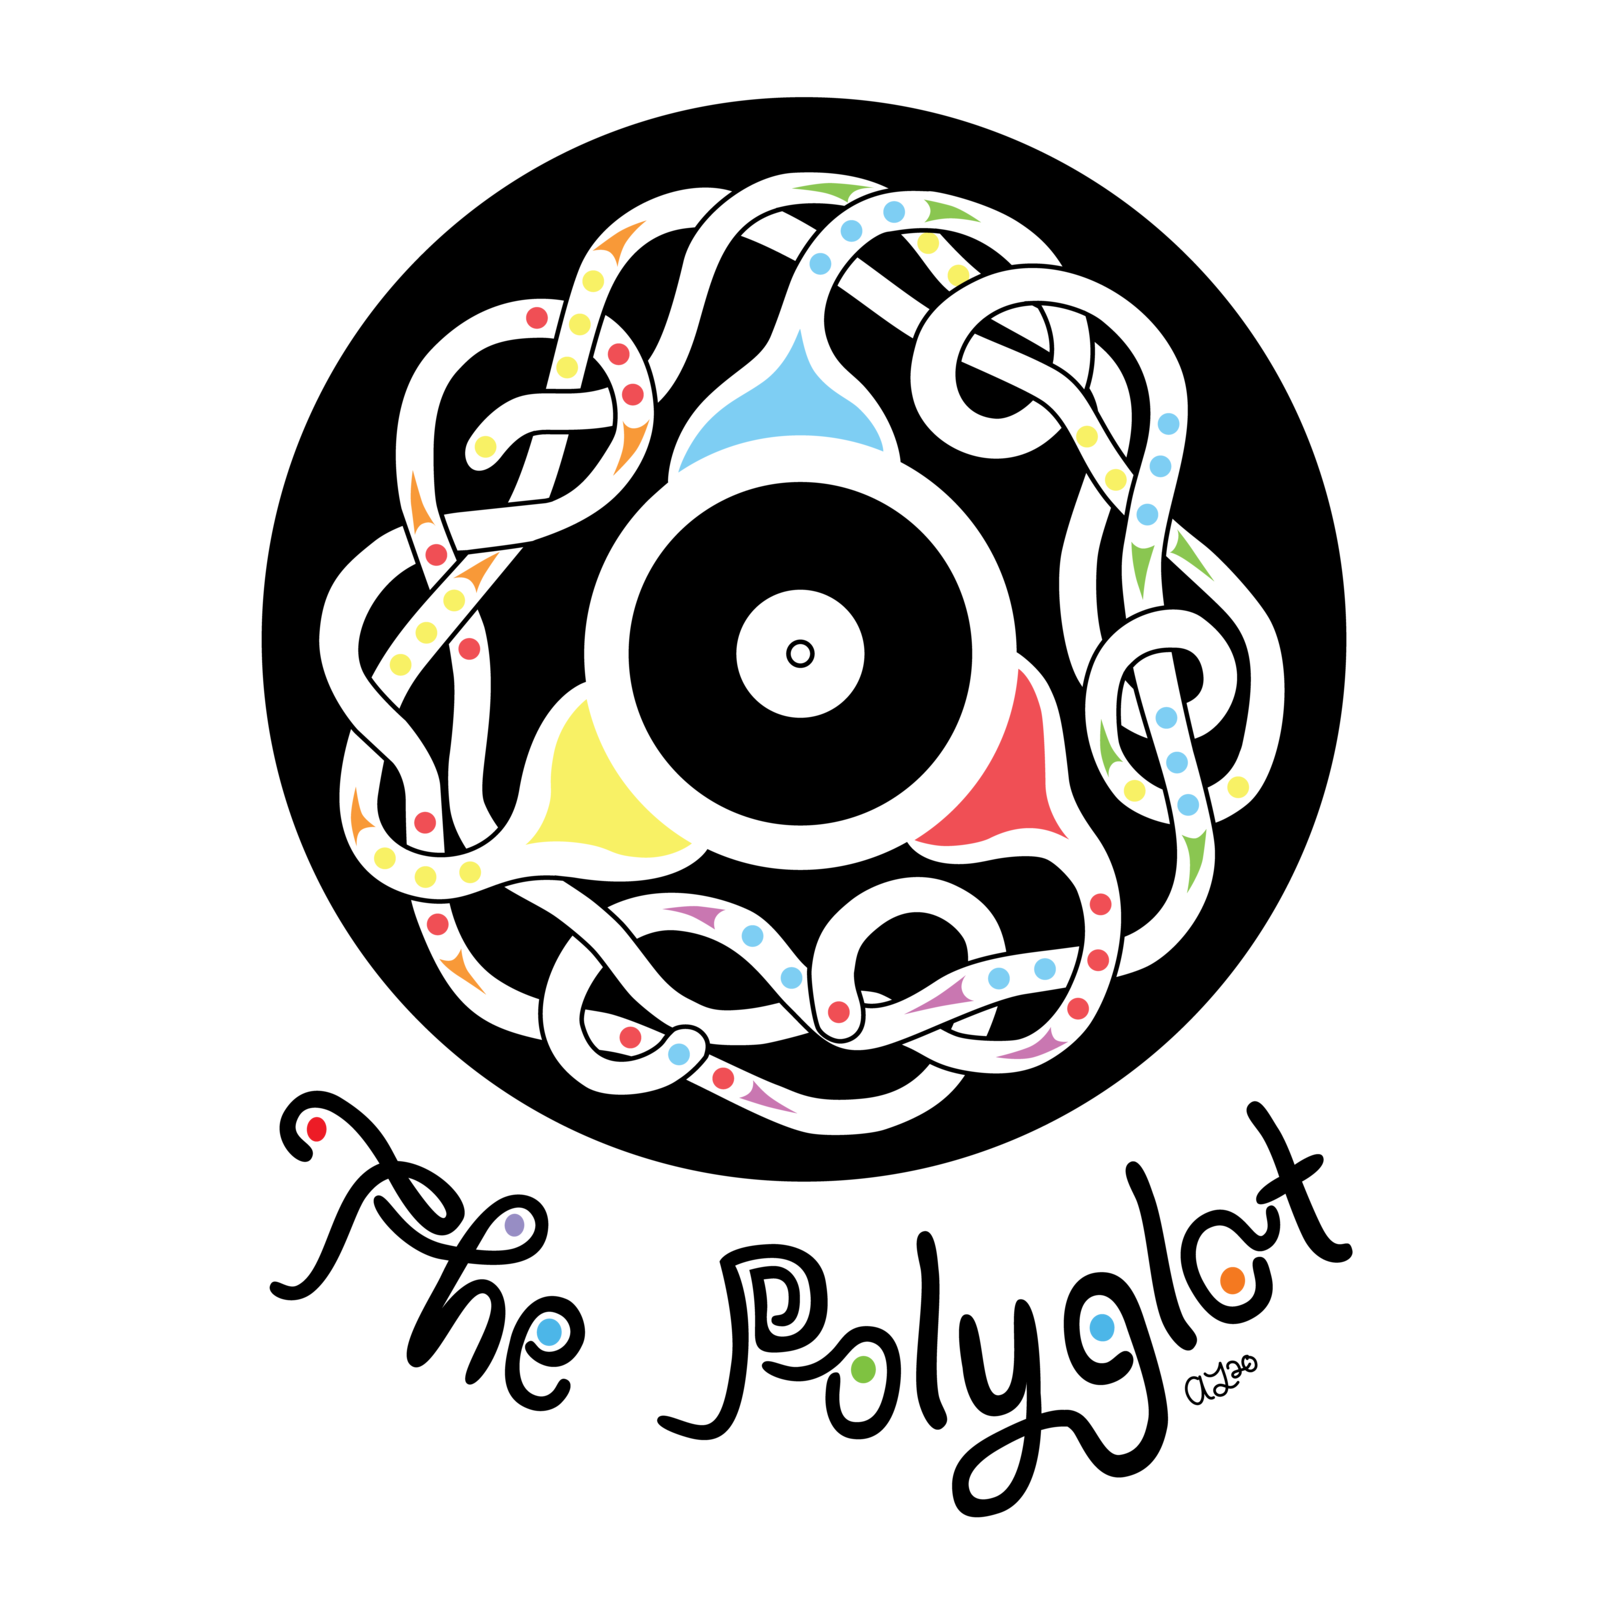 The Polyglot